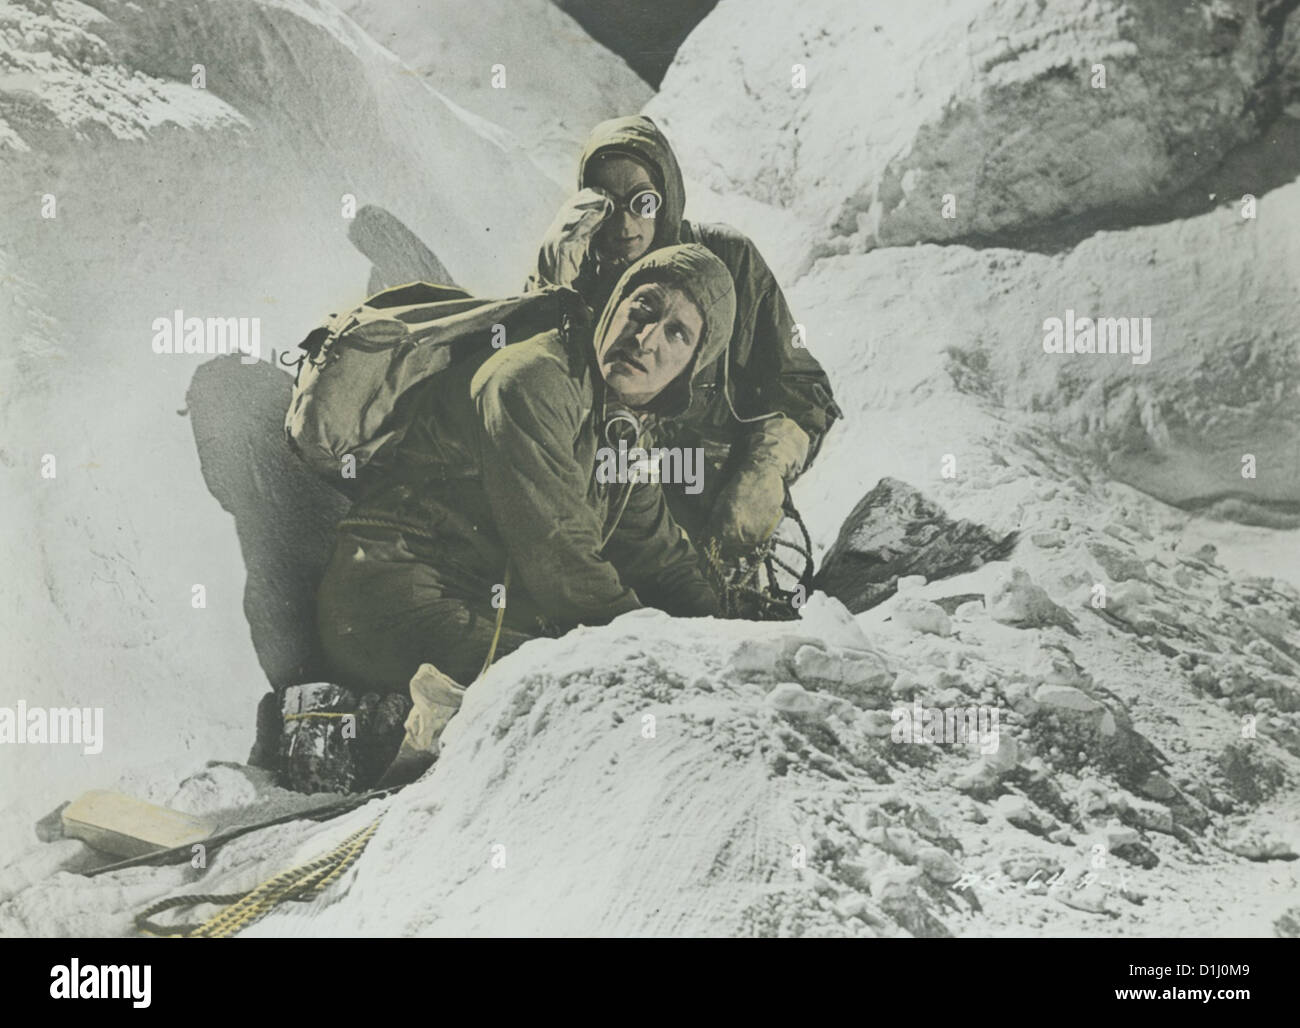 Yeti, Der Schneemensch   Abominable Snowman Of The Himalaya   Szenenbild  -- Stock Photo